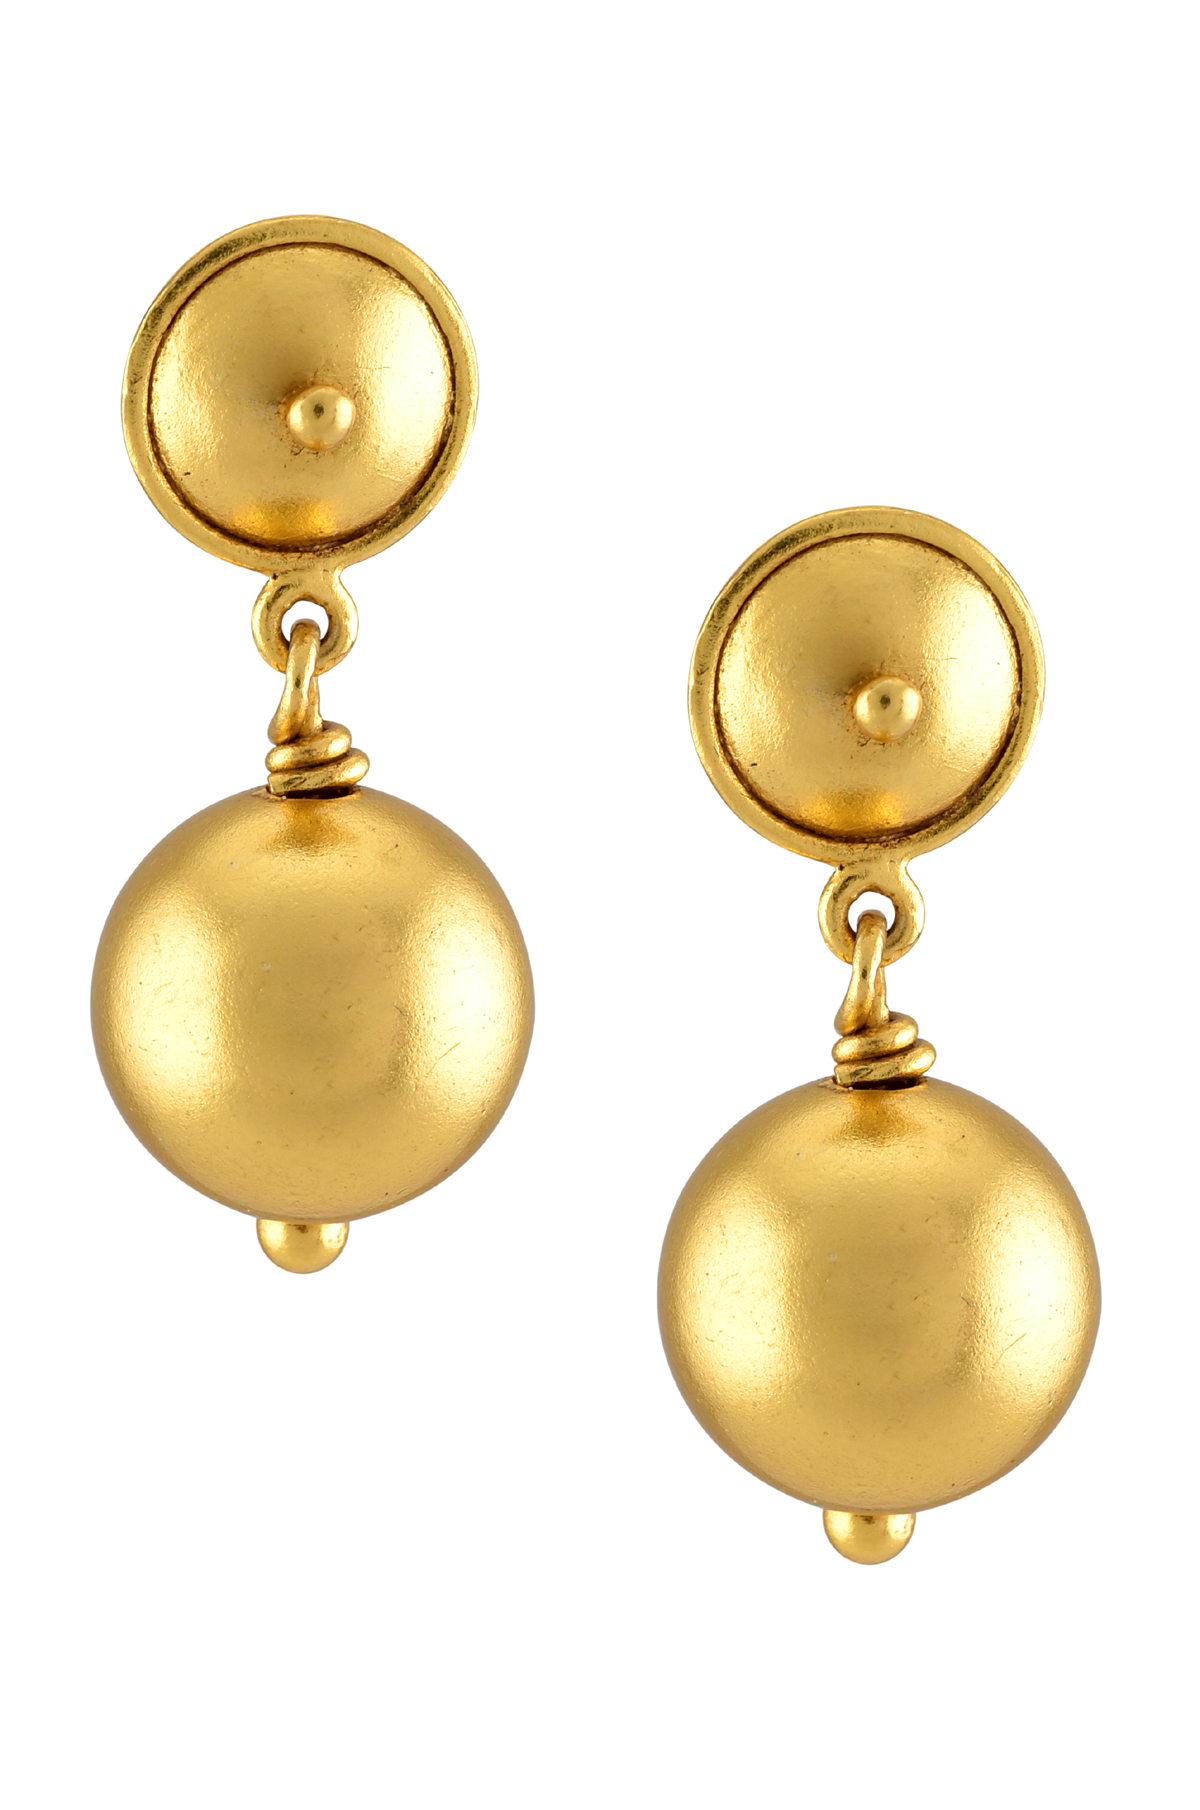 Golden Ball Gold Studs at Rs 3500/gram in Mumbai | ID: 19244630691